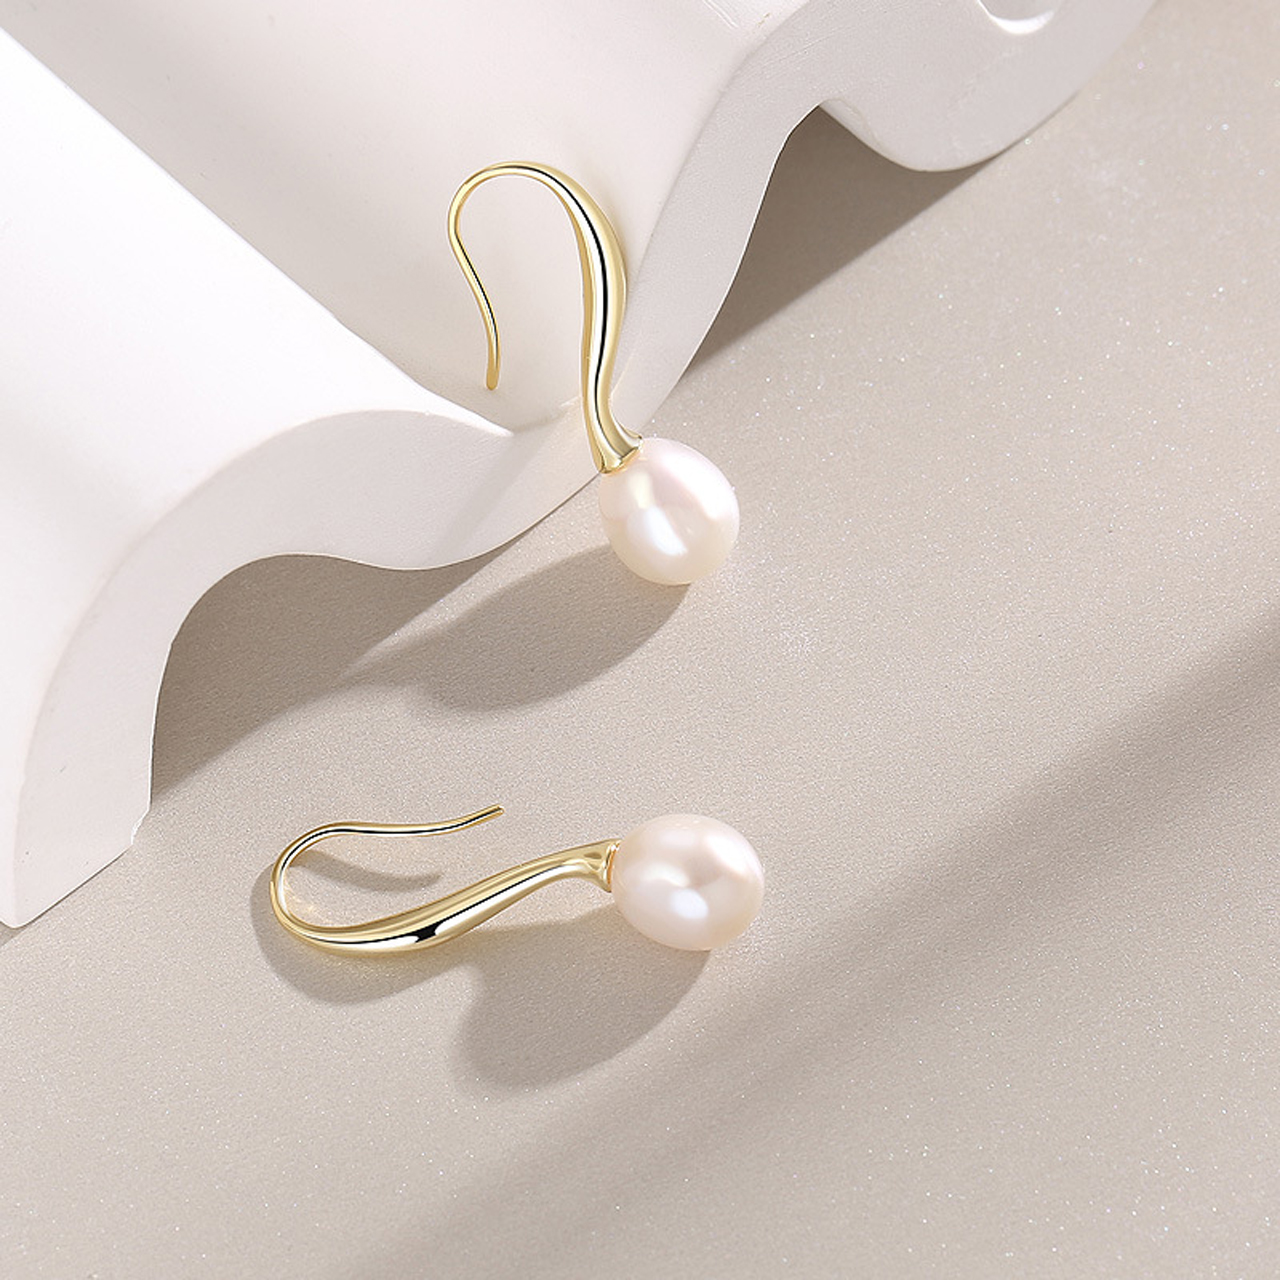 White Freshwater Pearl Earring